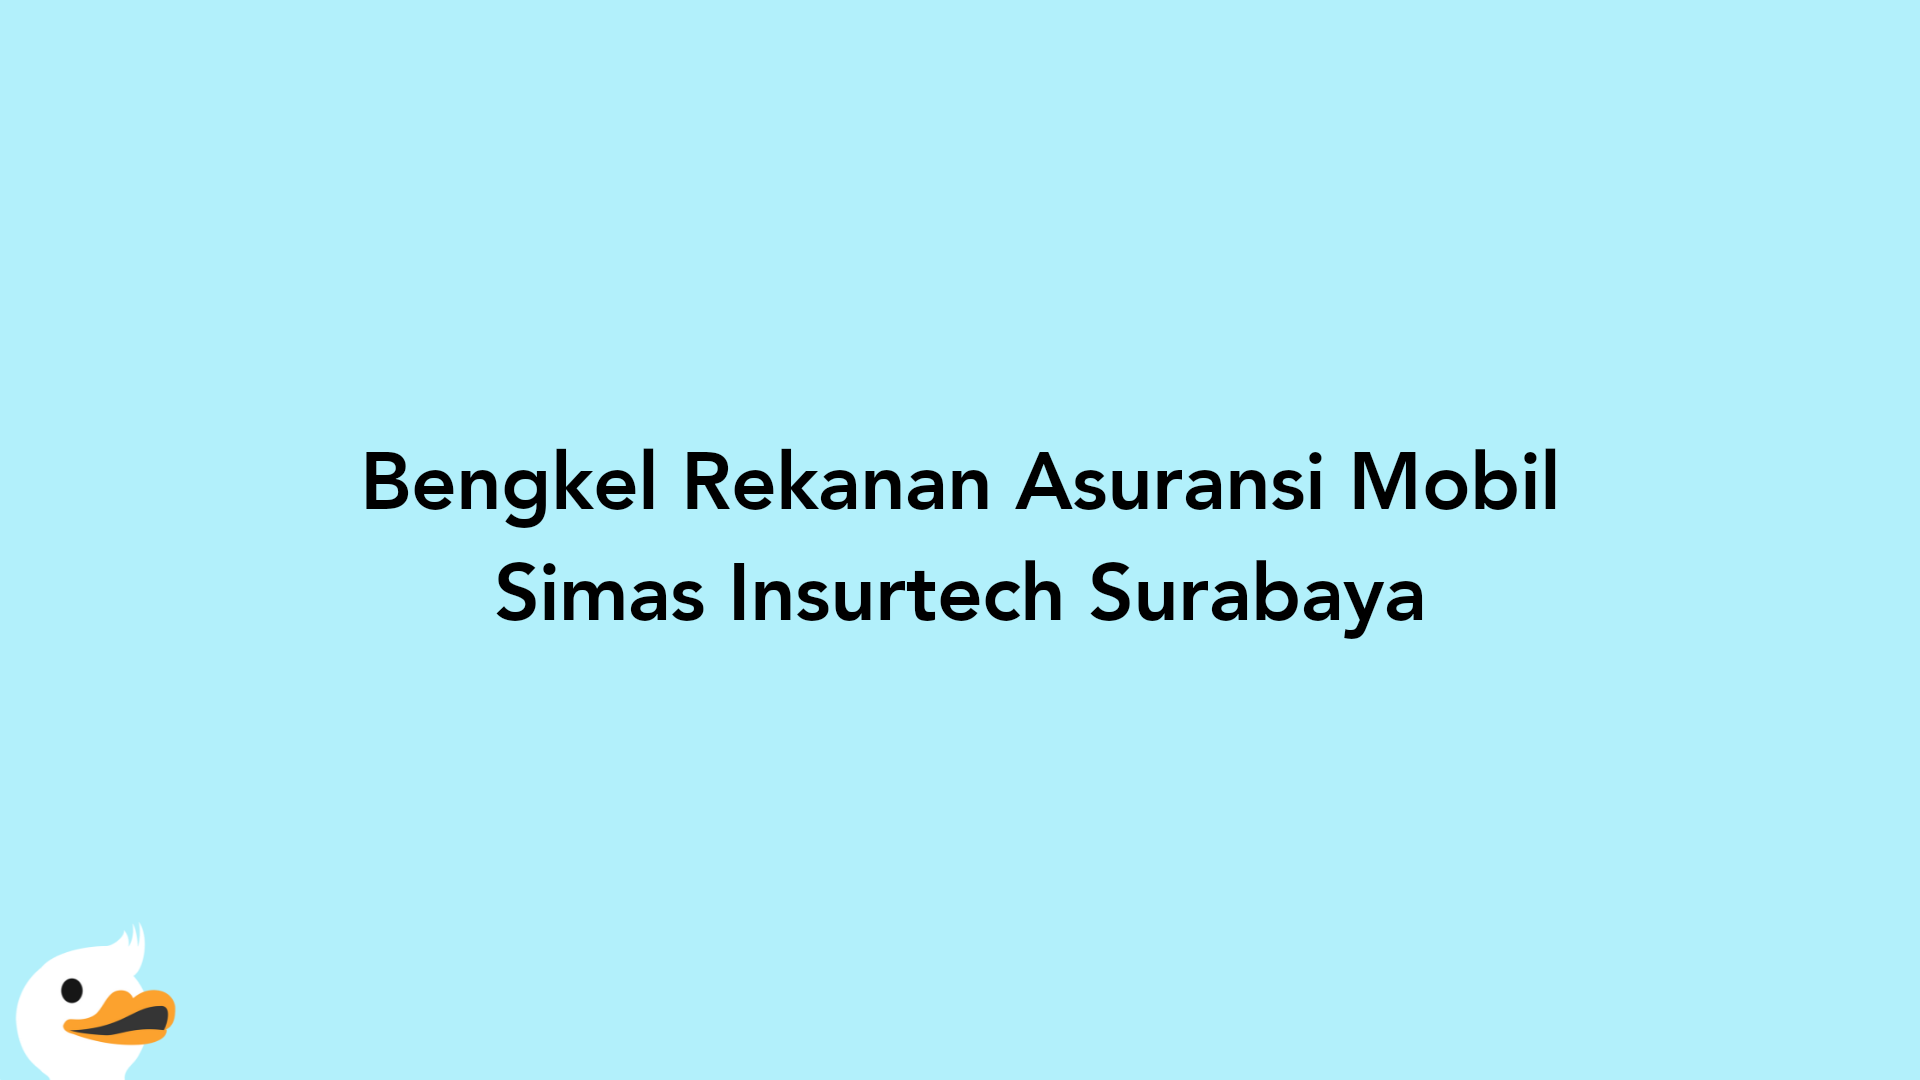 Bengkel Rekanan Asuransi Mobil Simas Insurtech Surabaya